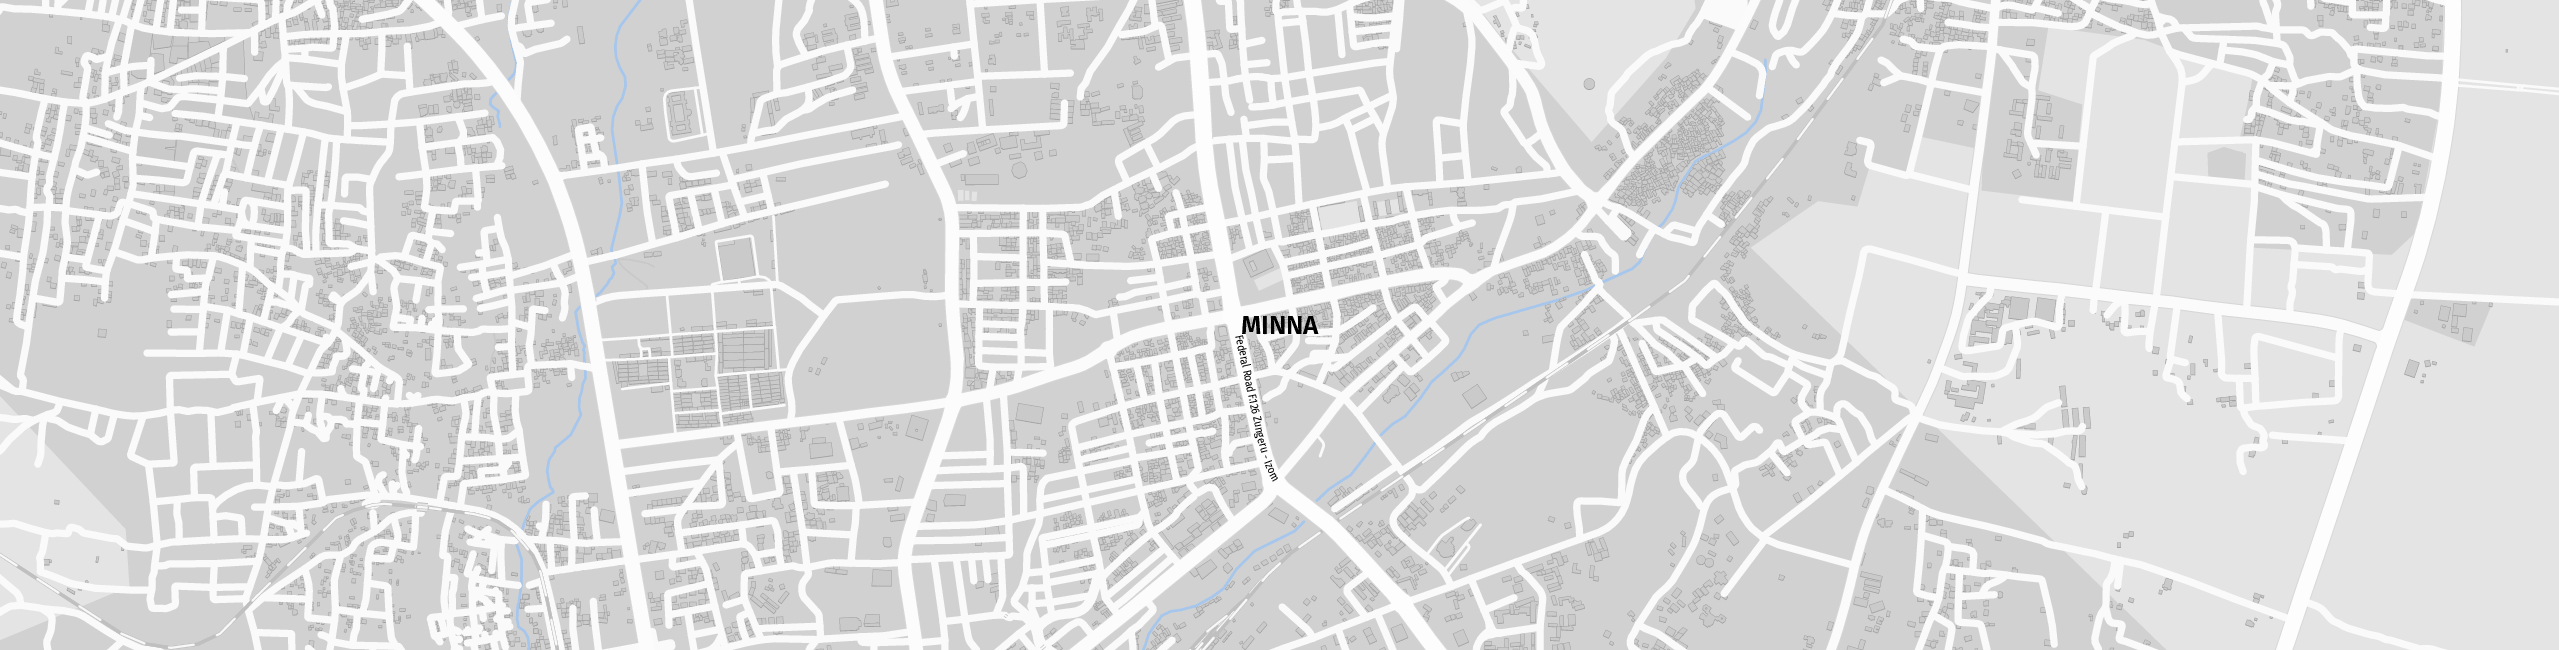 Stadtplan Minna zum Downloaden.